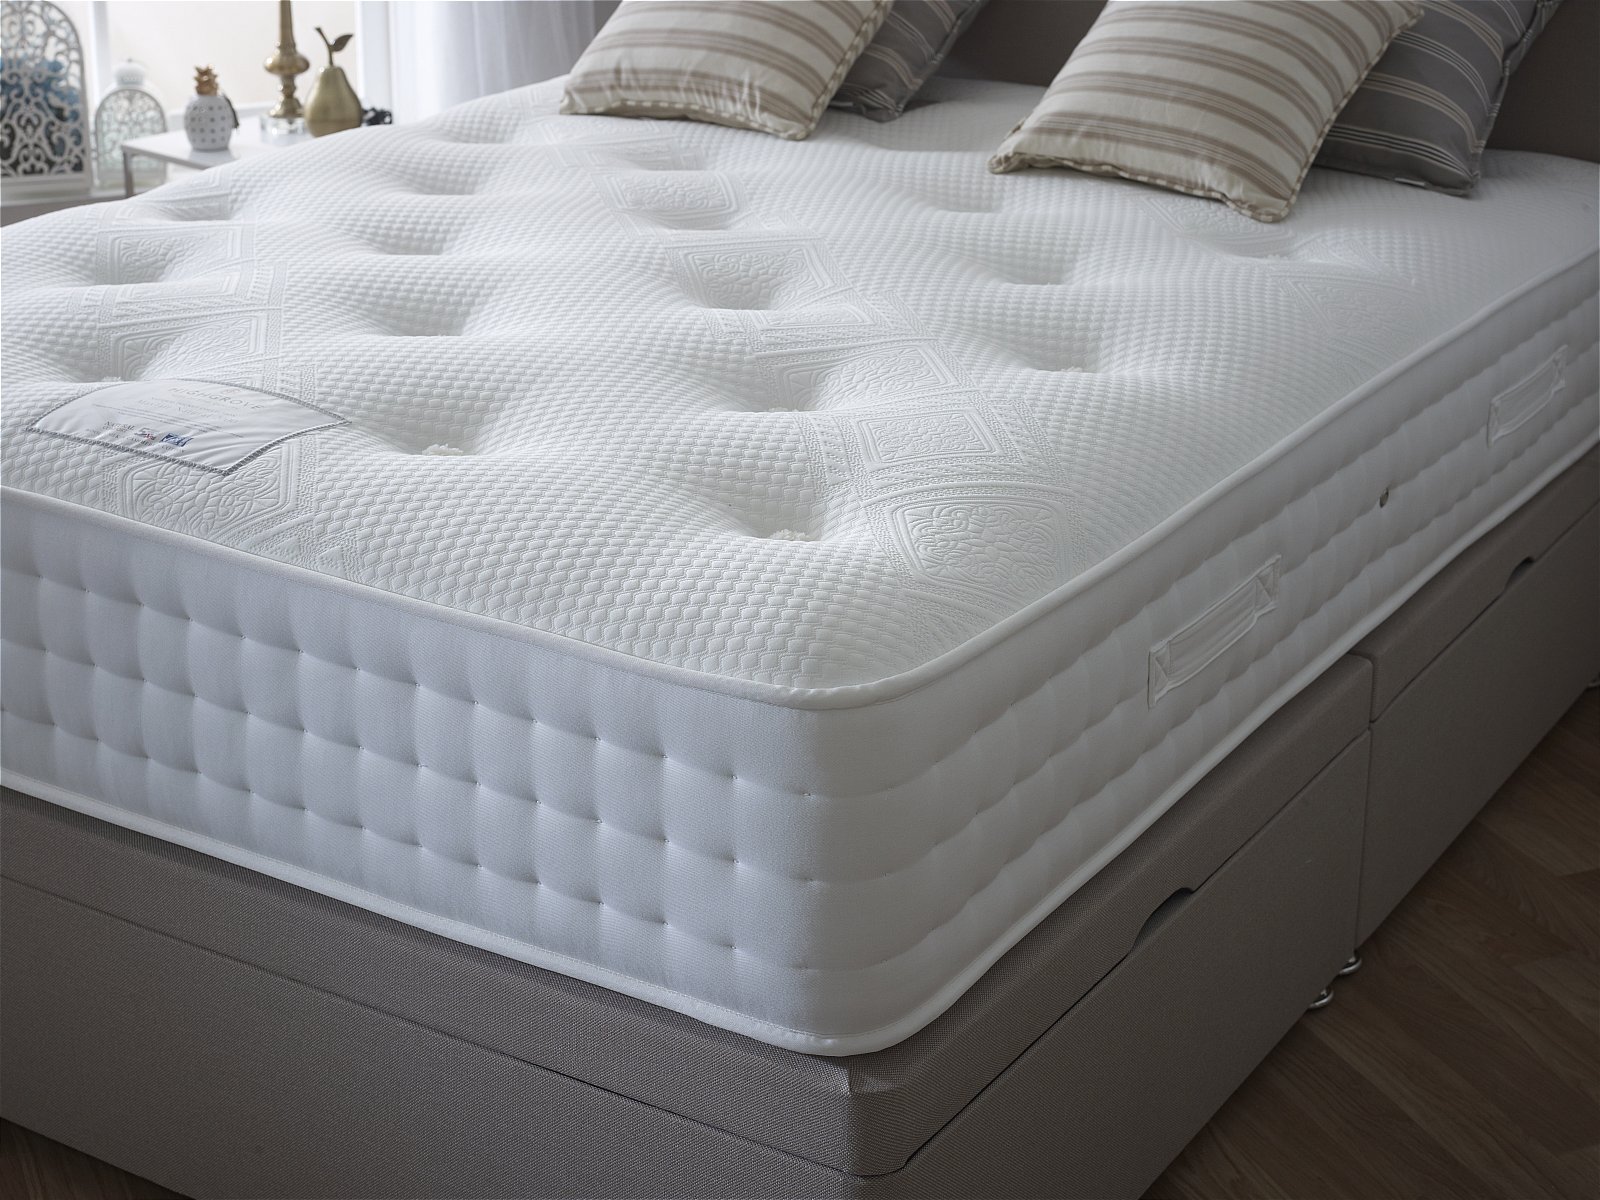 highgrove euphoria mattress reviews